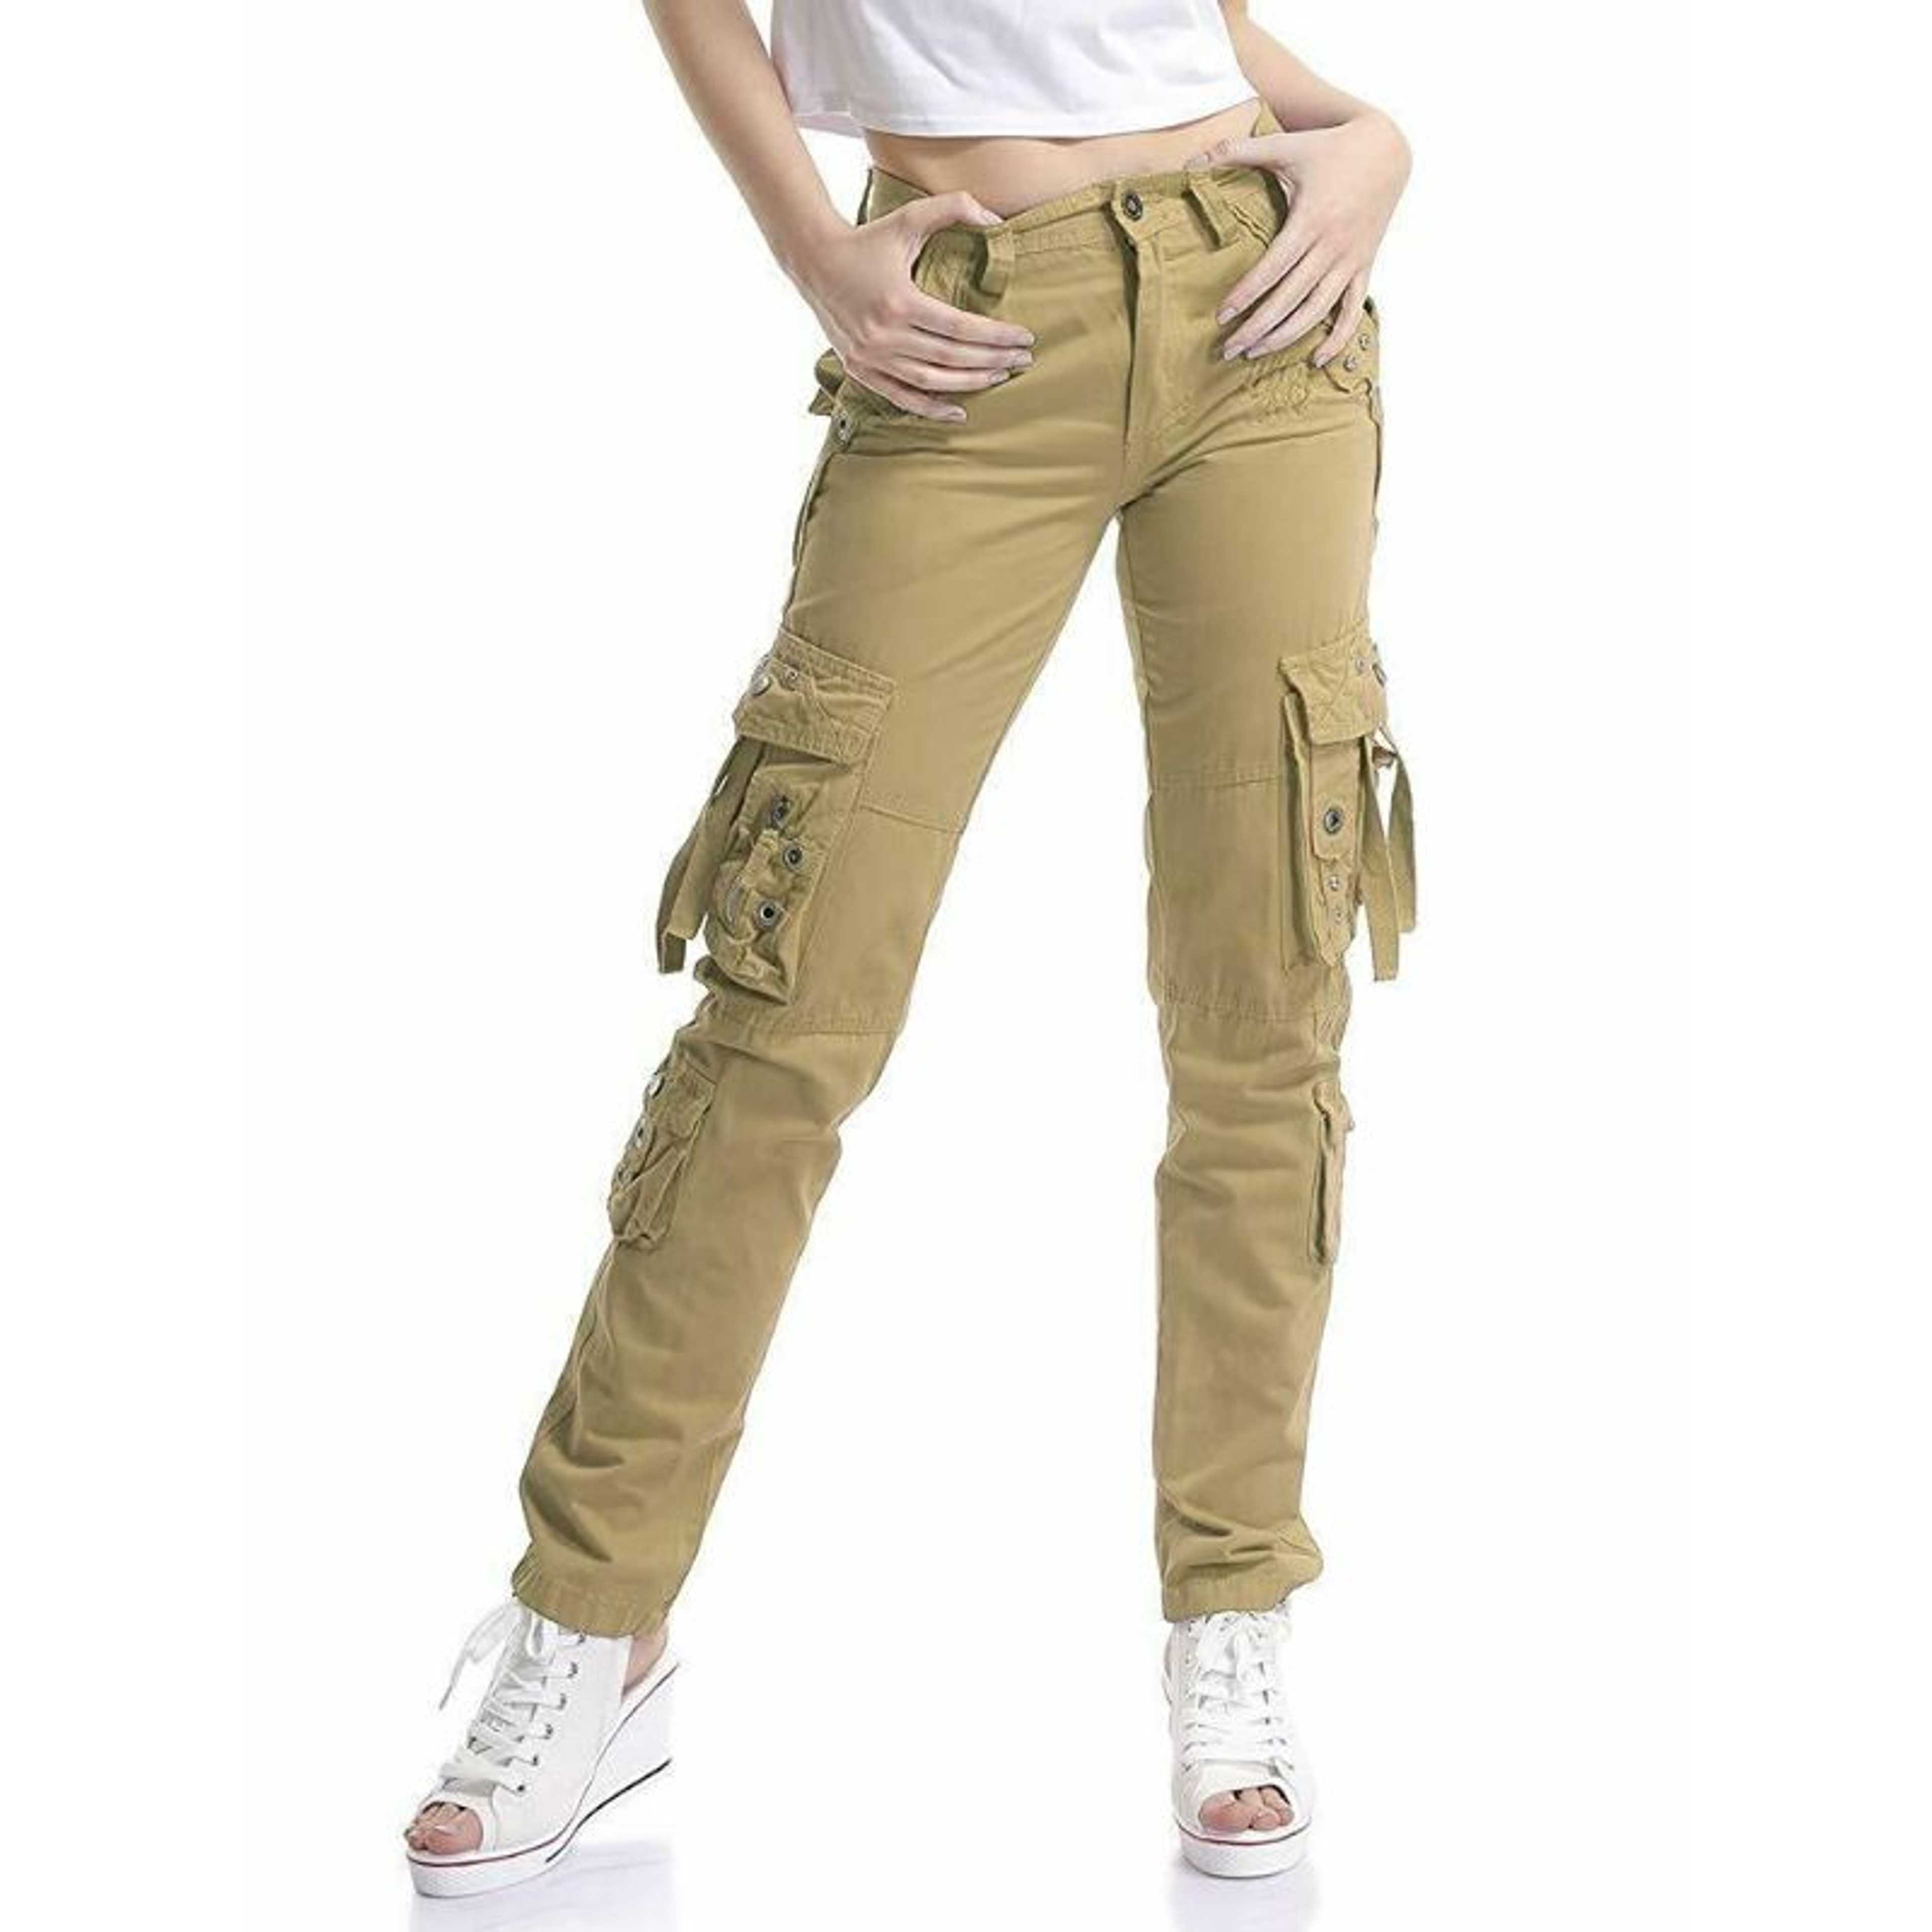 Khaki Color Rubahas Womens Cargo Trousers Ladies Trousers Jeans Pants